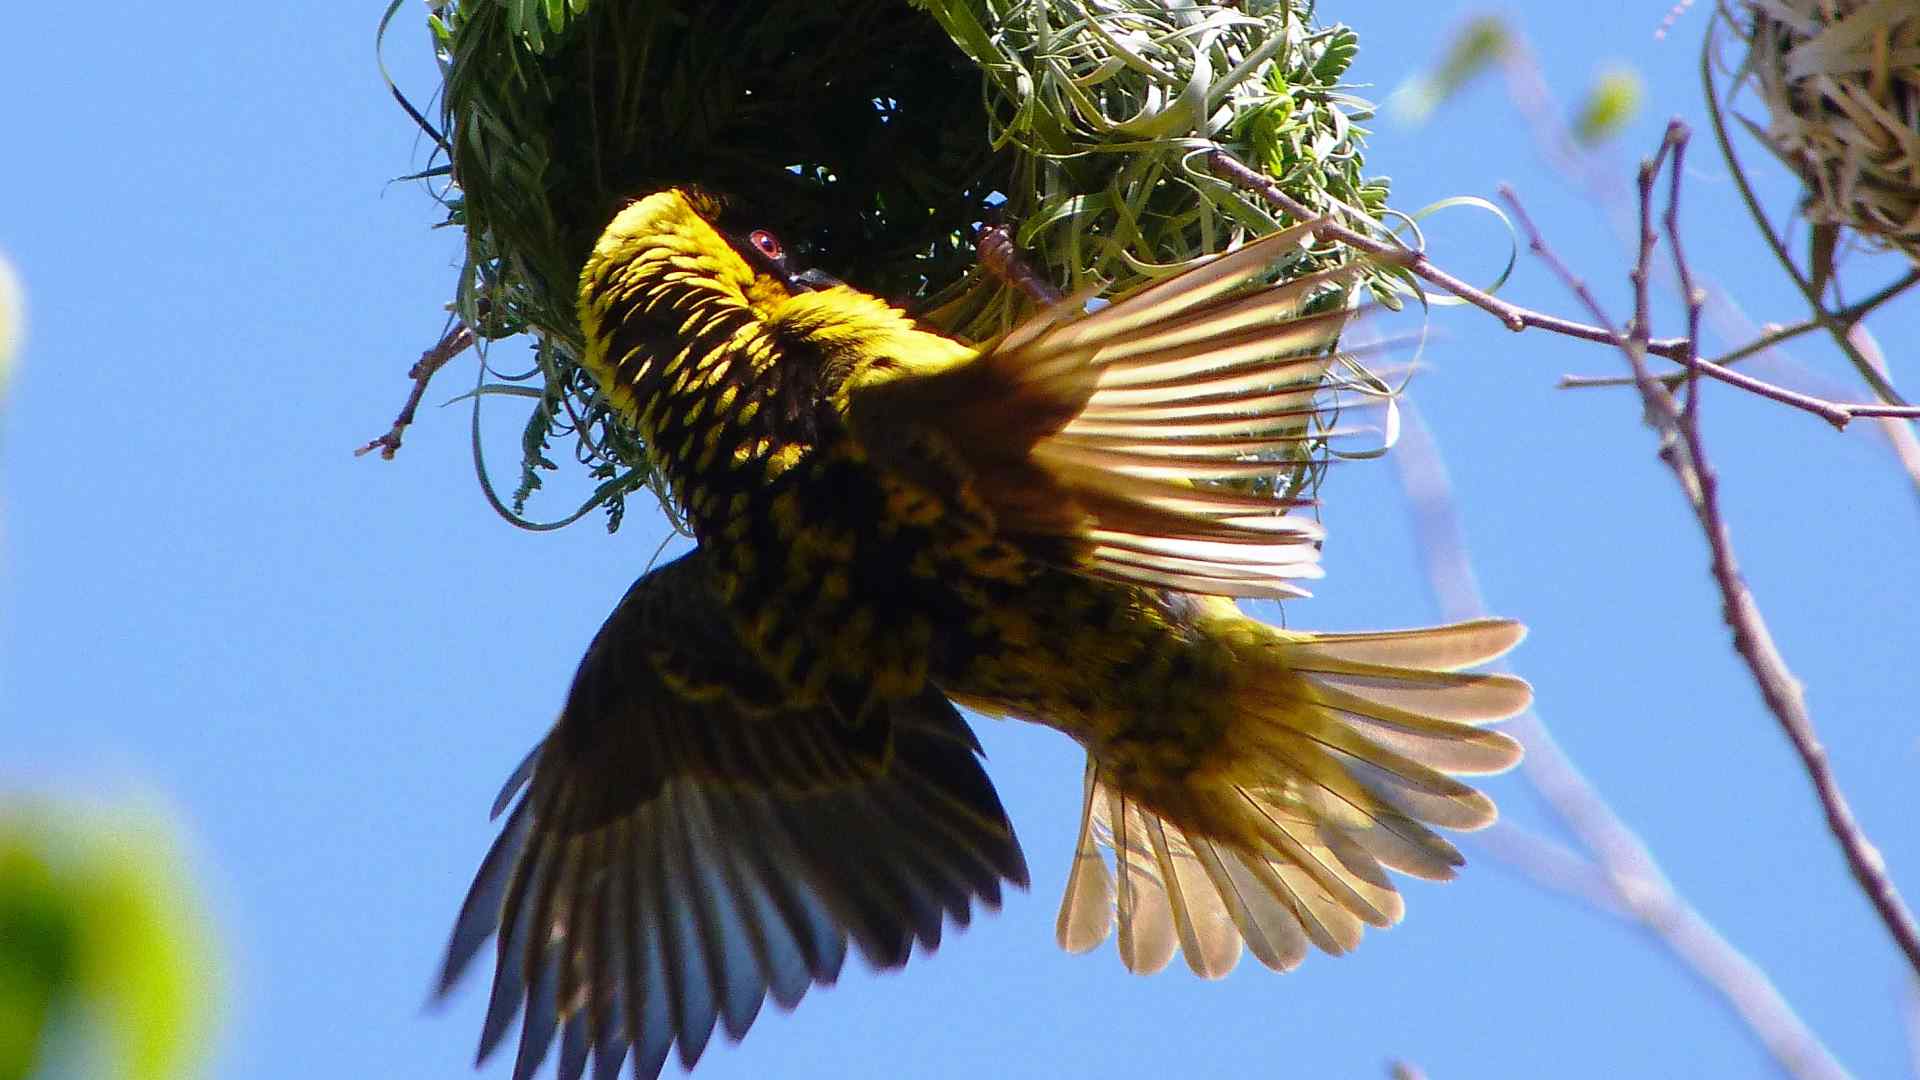 Bird flying in its nest